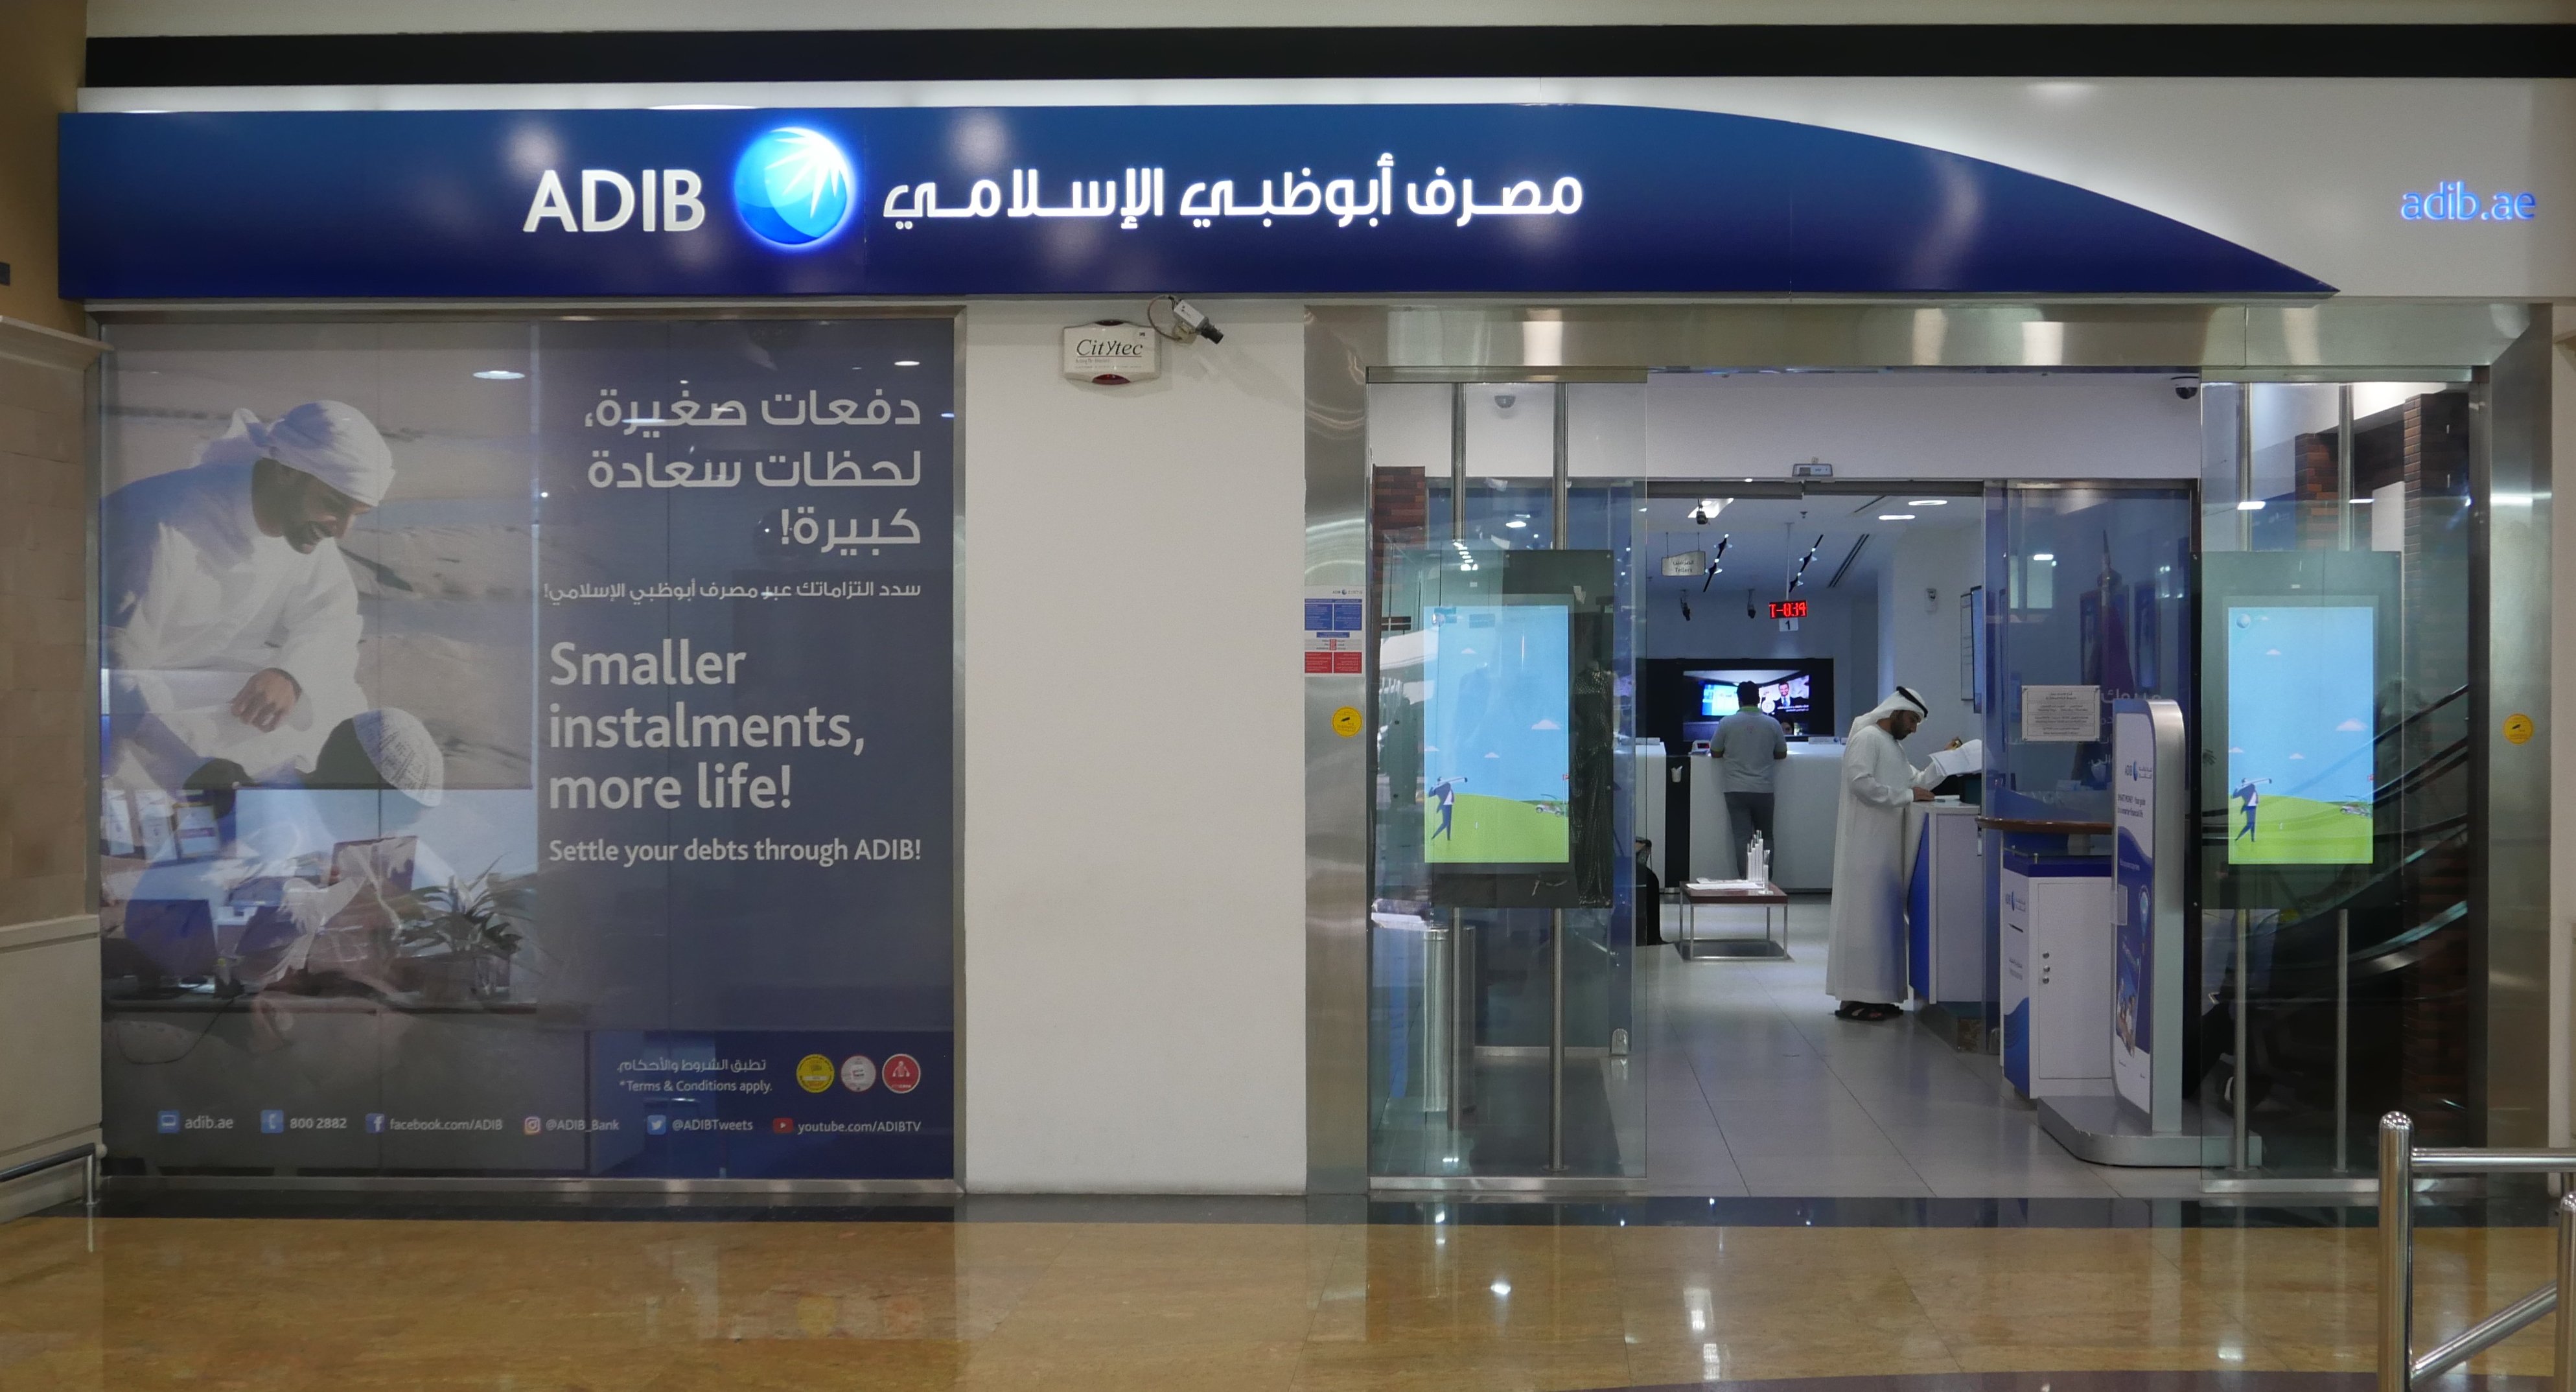 Abu Dhabi Islamic Bank Banknoted Banks In The Uae - kulturaupice